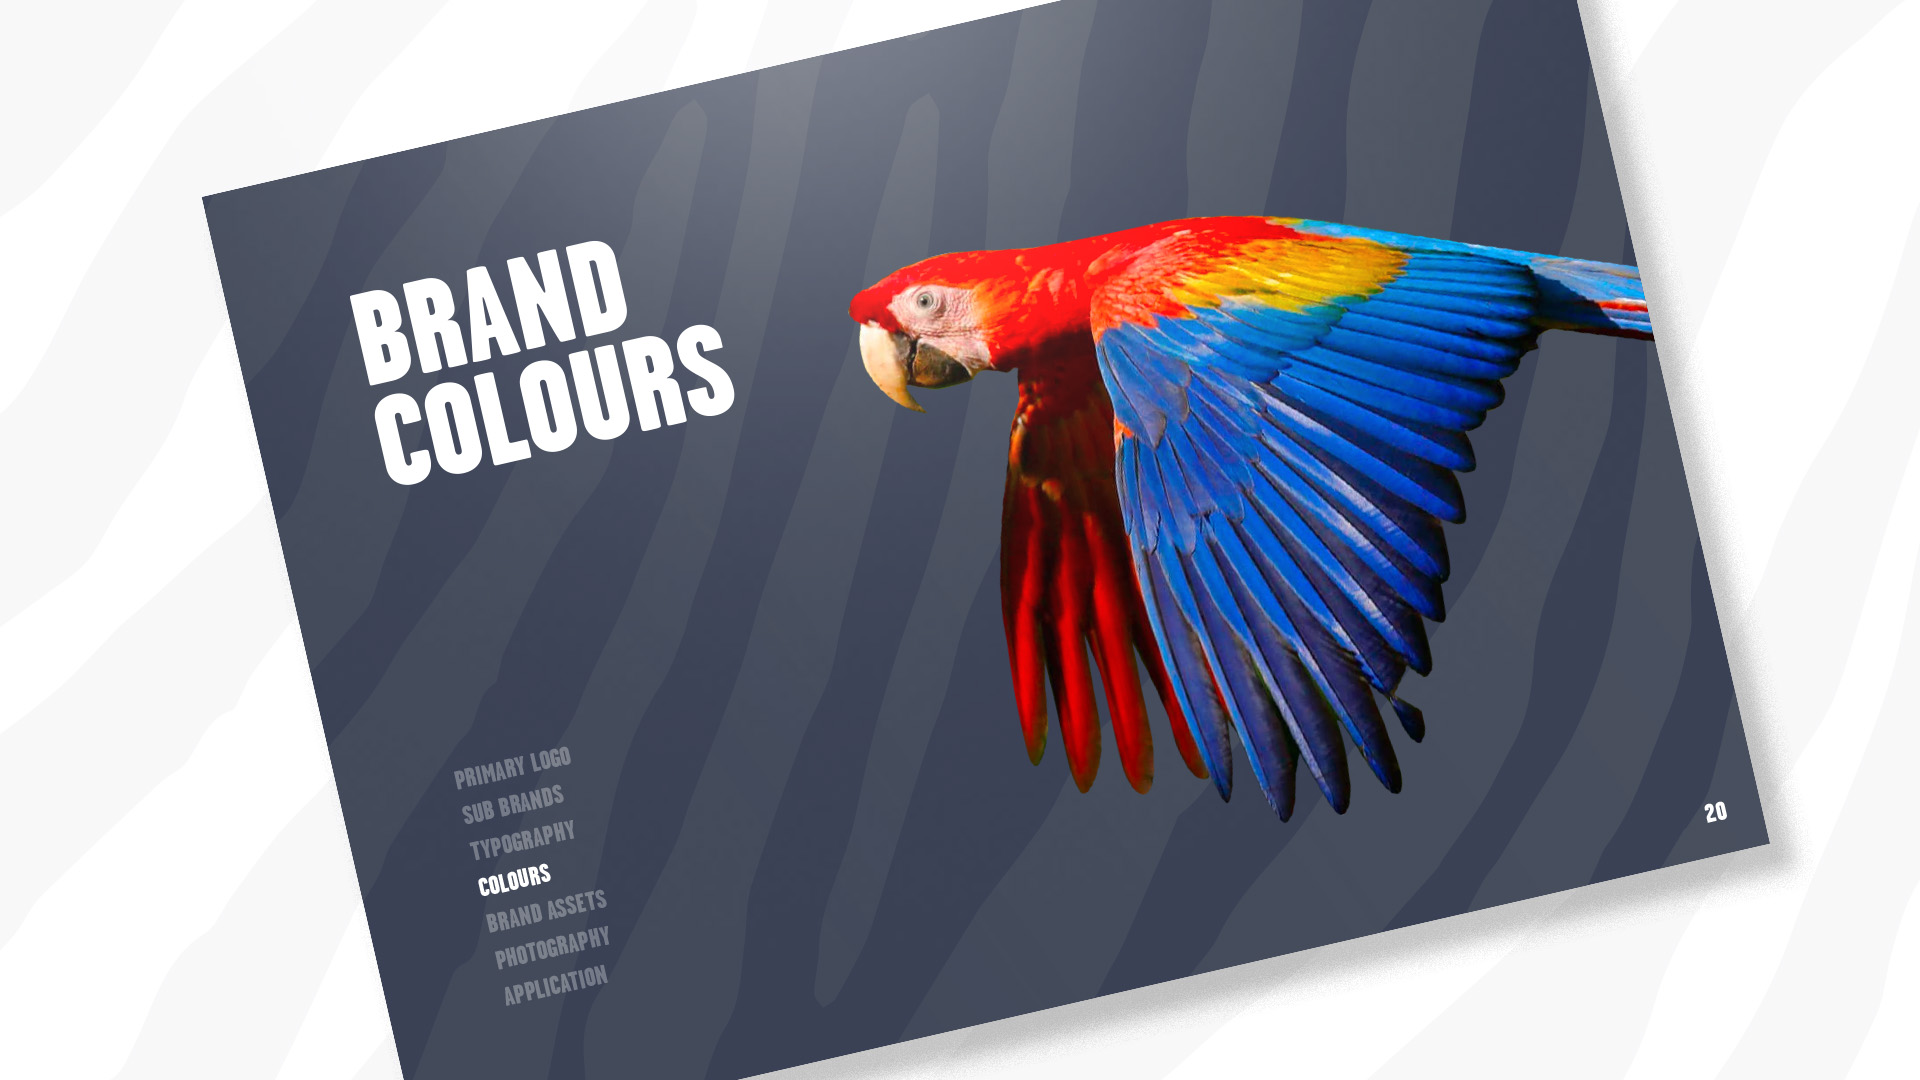 Banham Zoo brand colours